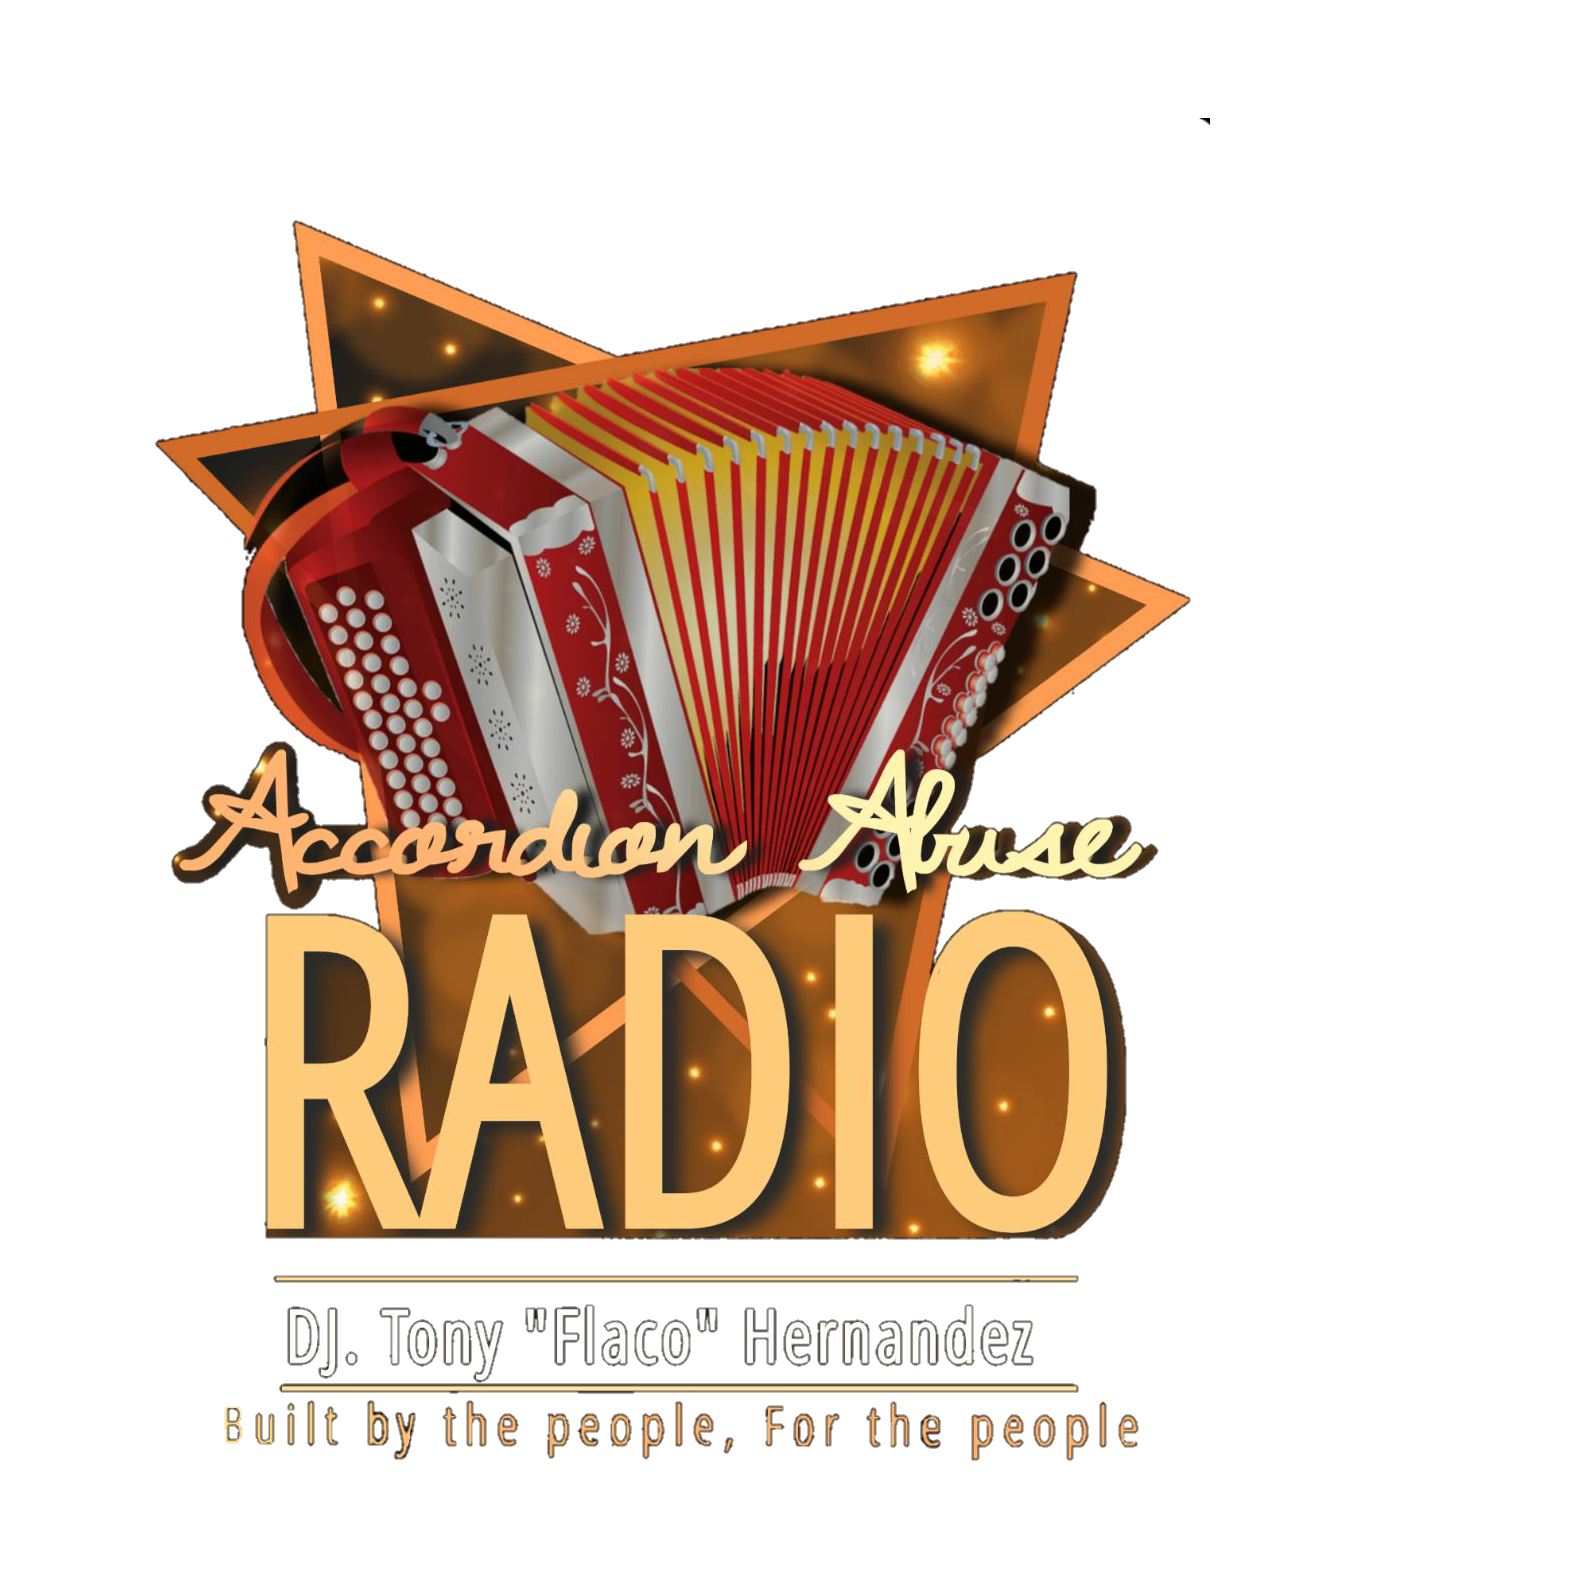 accordion abuse radio